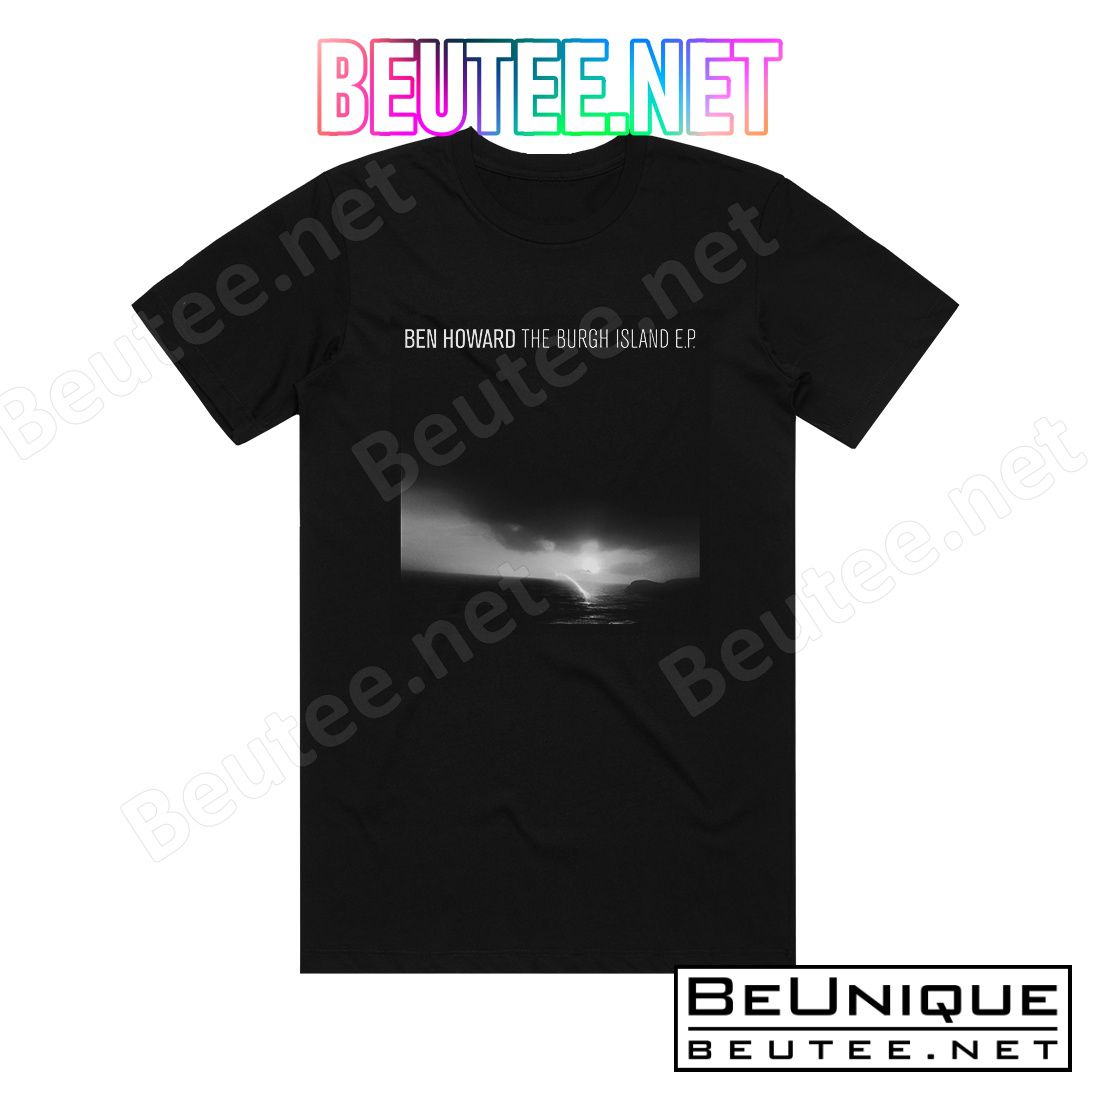 Ben Howard The Burgh Island Ep Album Cover T-Shirt